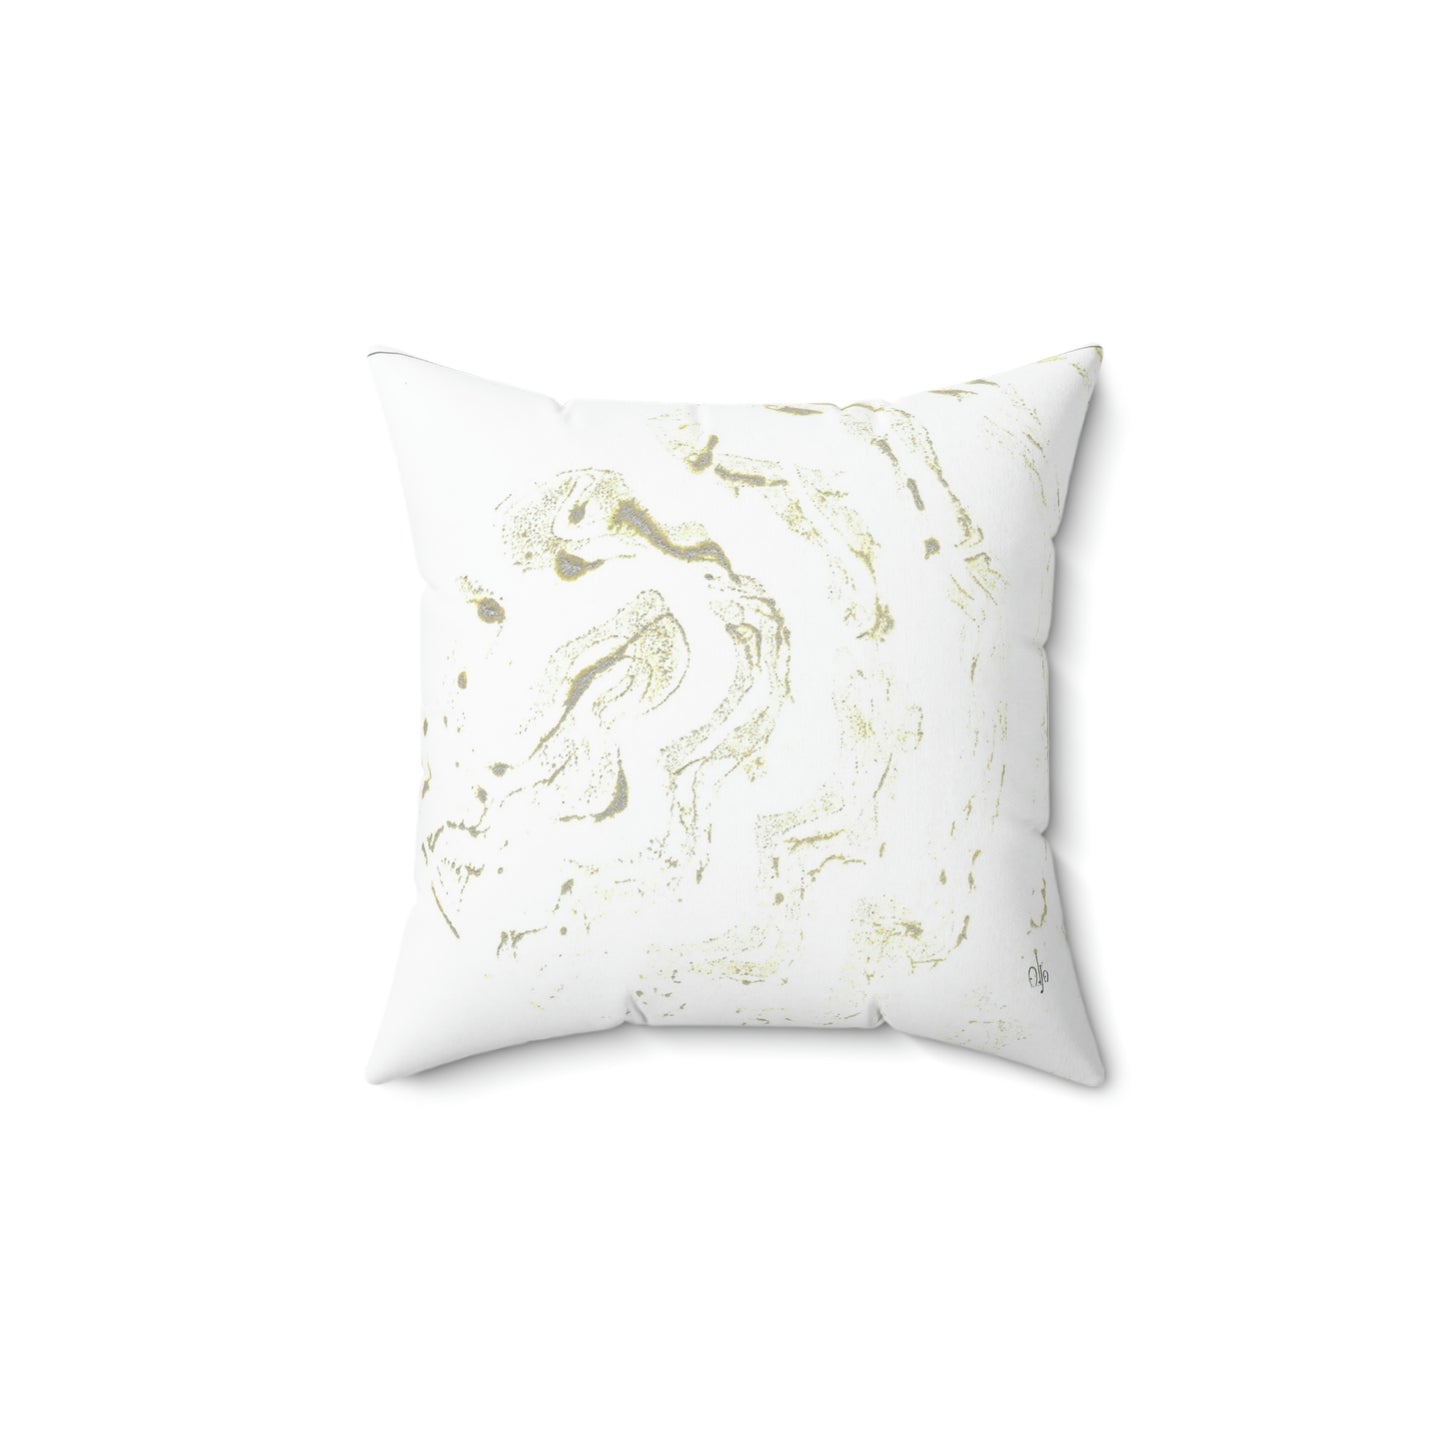 Faded Shell Square Pillow - Alja Design